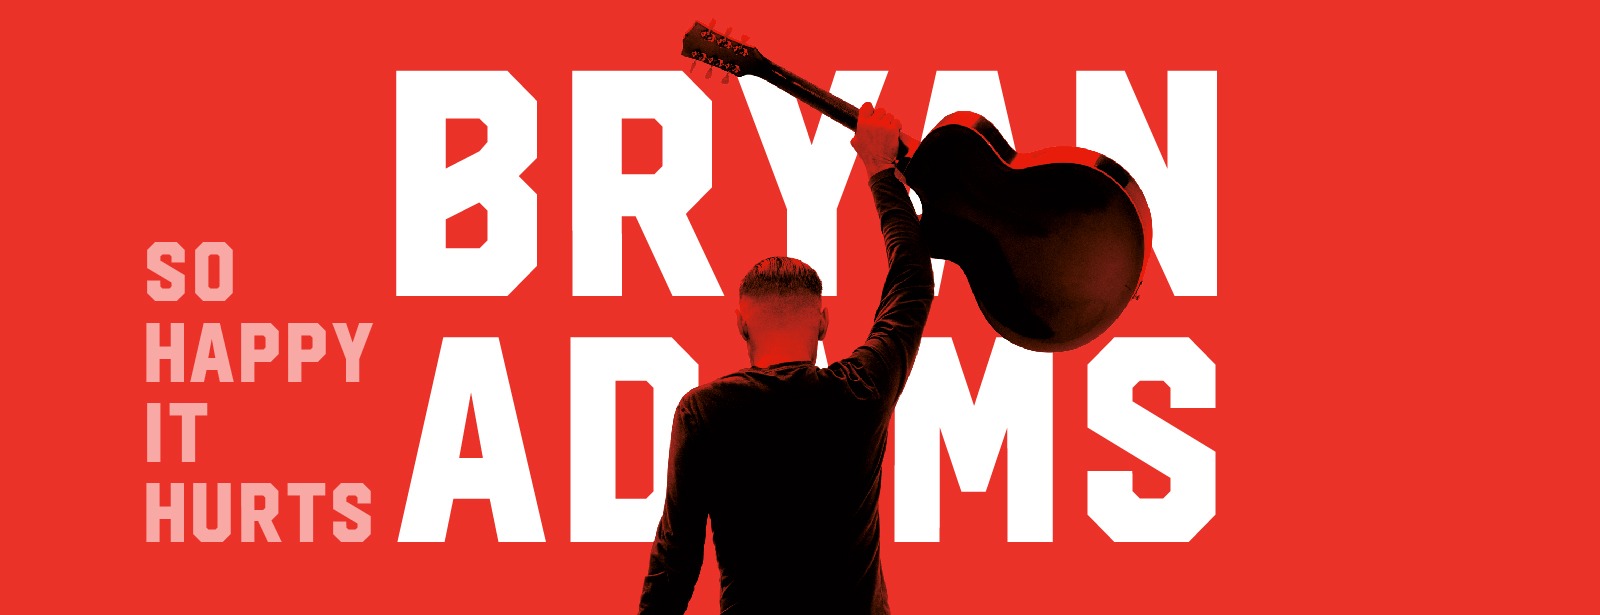 Bryan Adams Live Concert in Coca-Cola Arena - Coming Soon in UAE